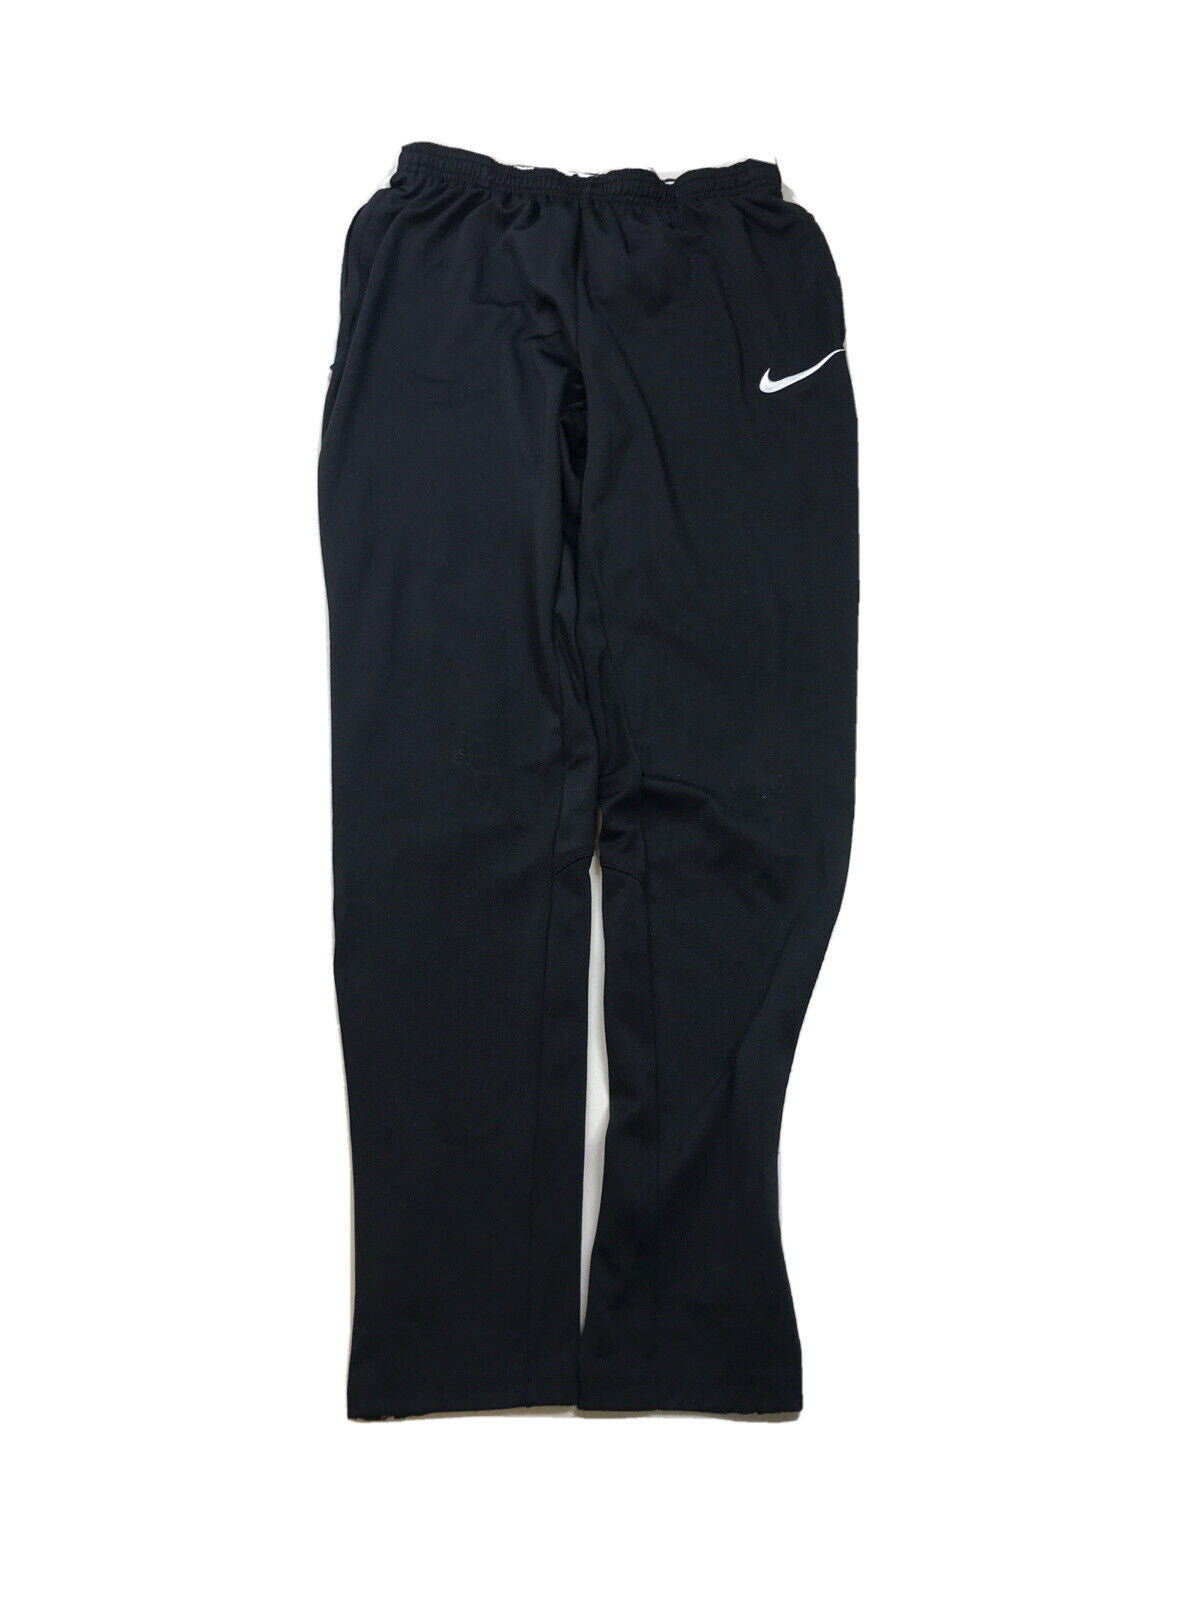 Nike Men's Black Dri-Fit Polyester Slim Soccer Athletic Pants - S